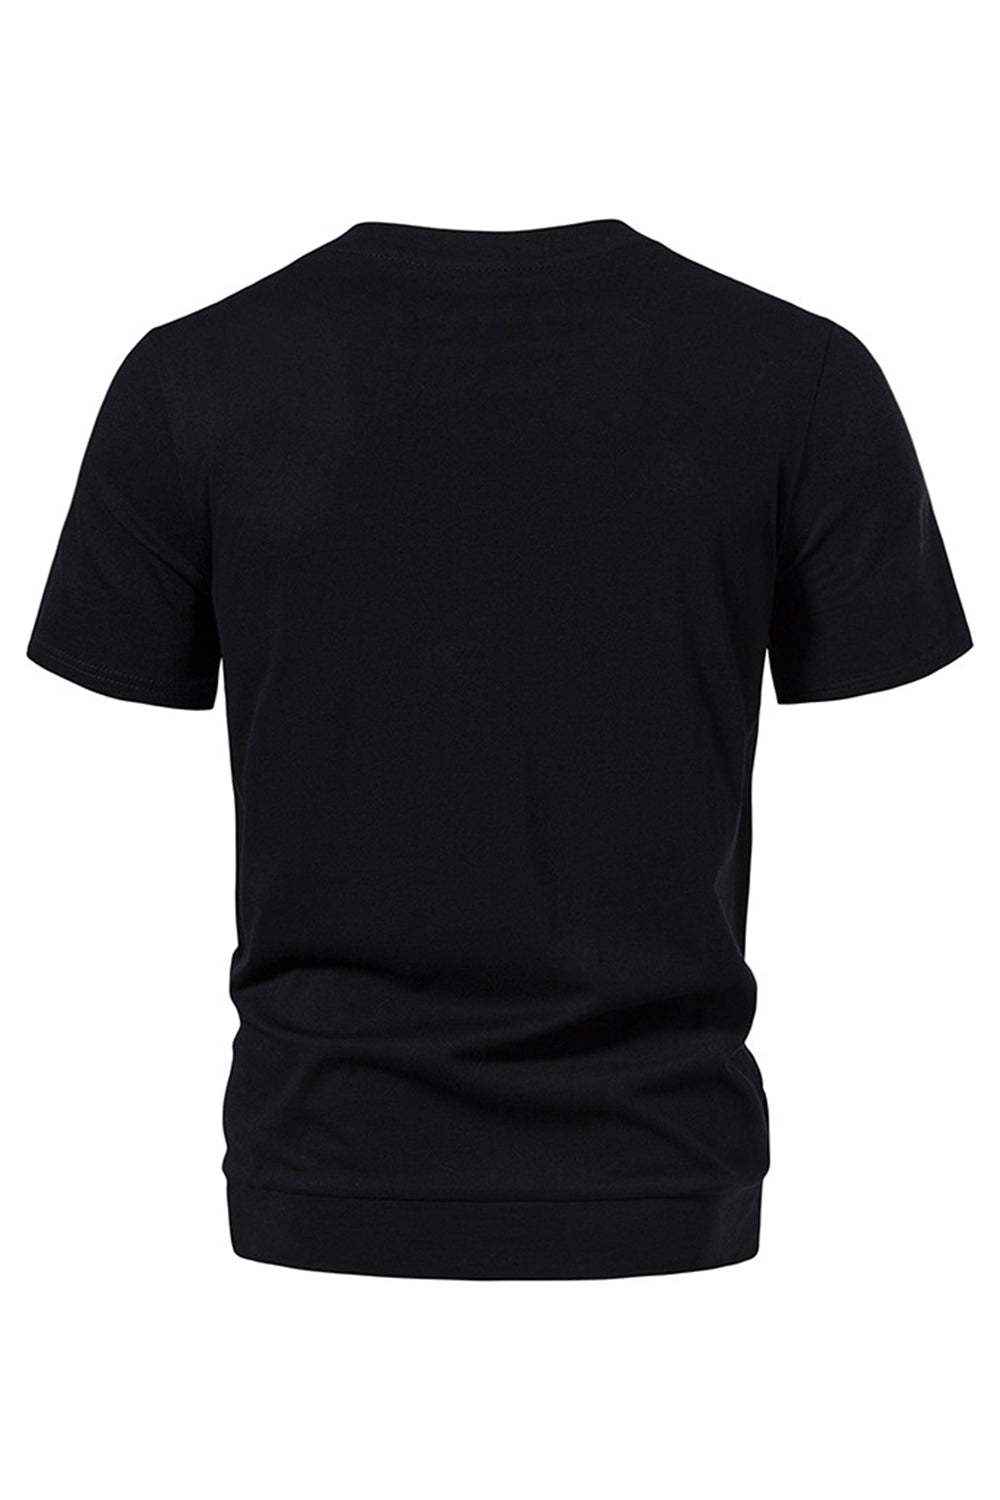 Black Patchwork Casual Summer Men's T-shirt